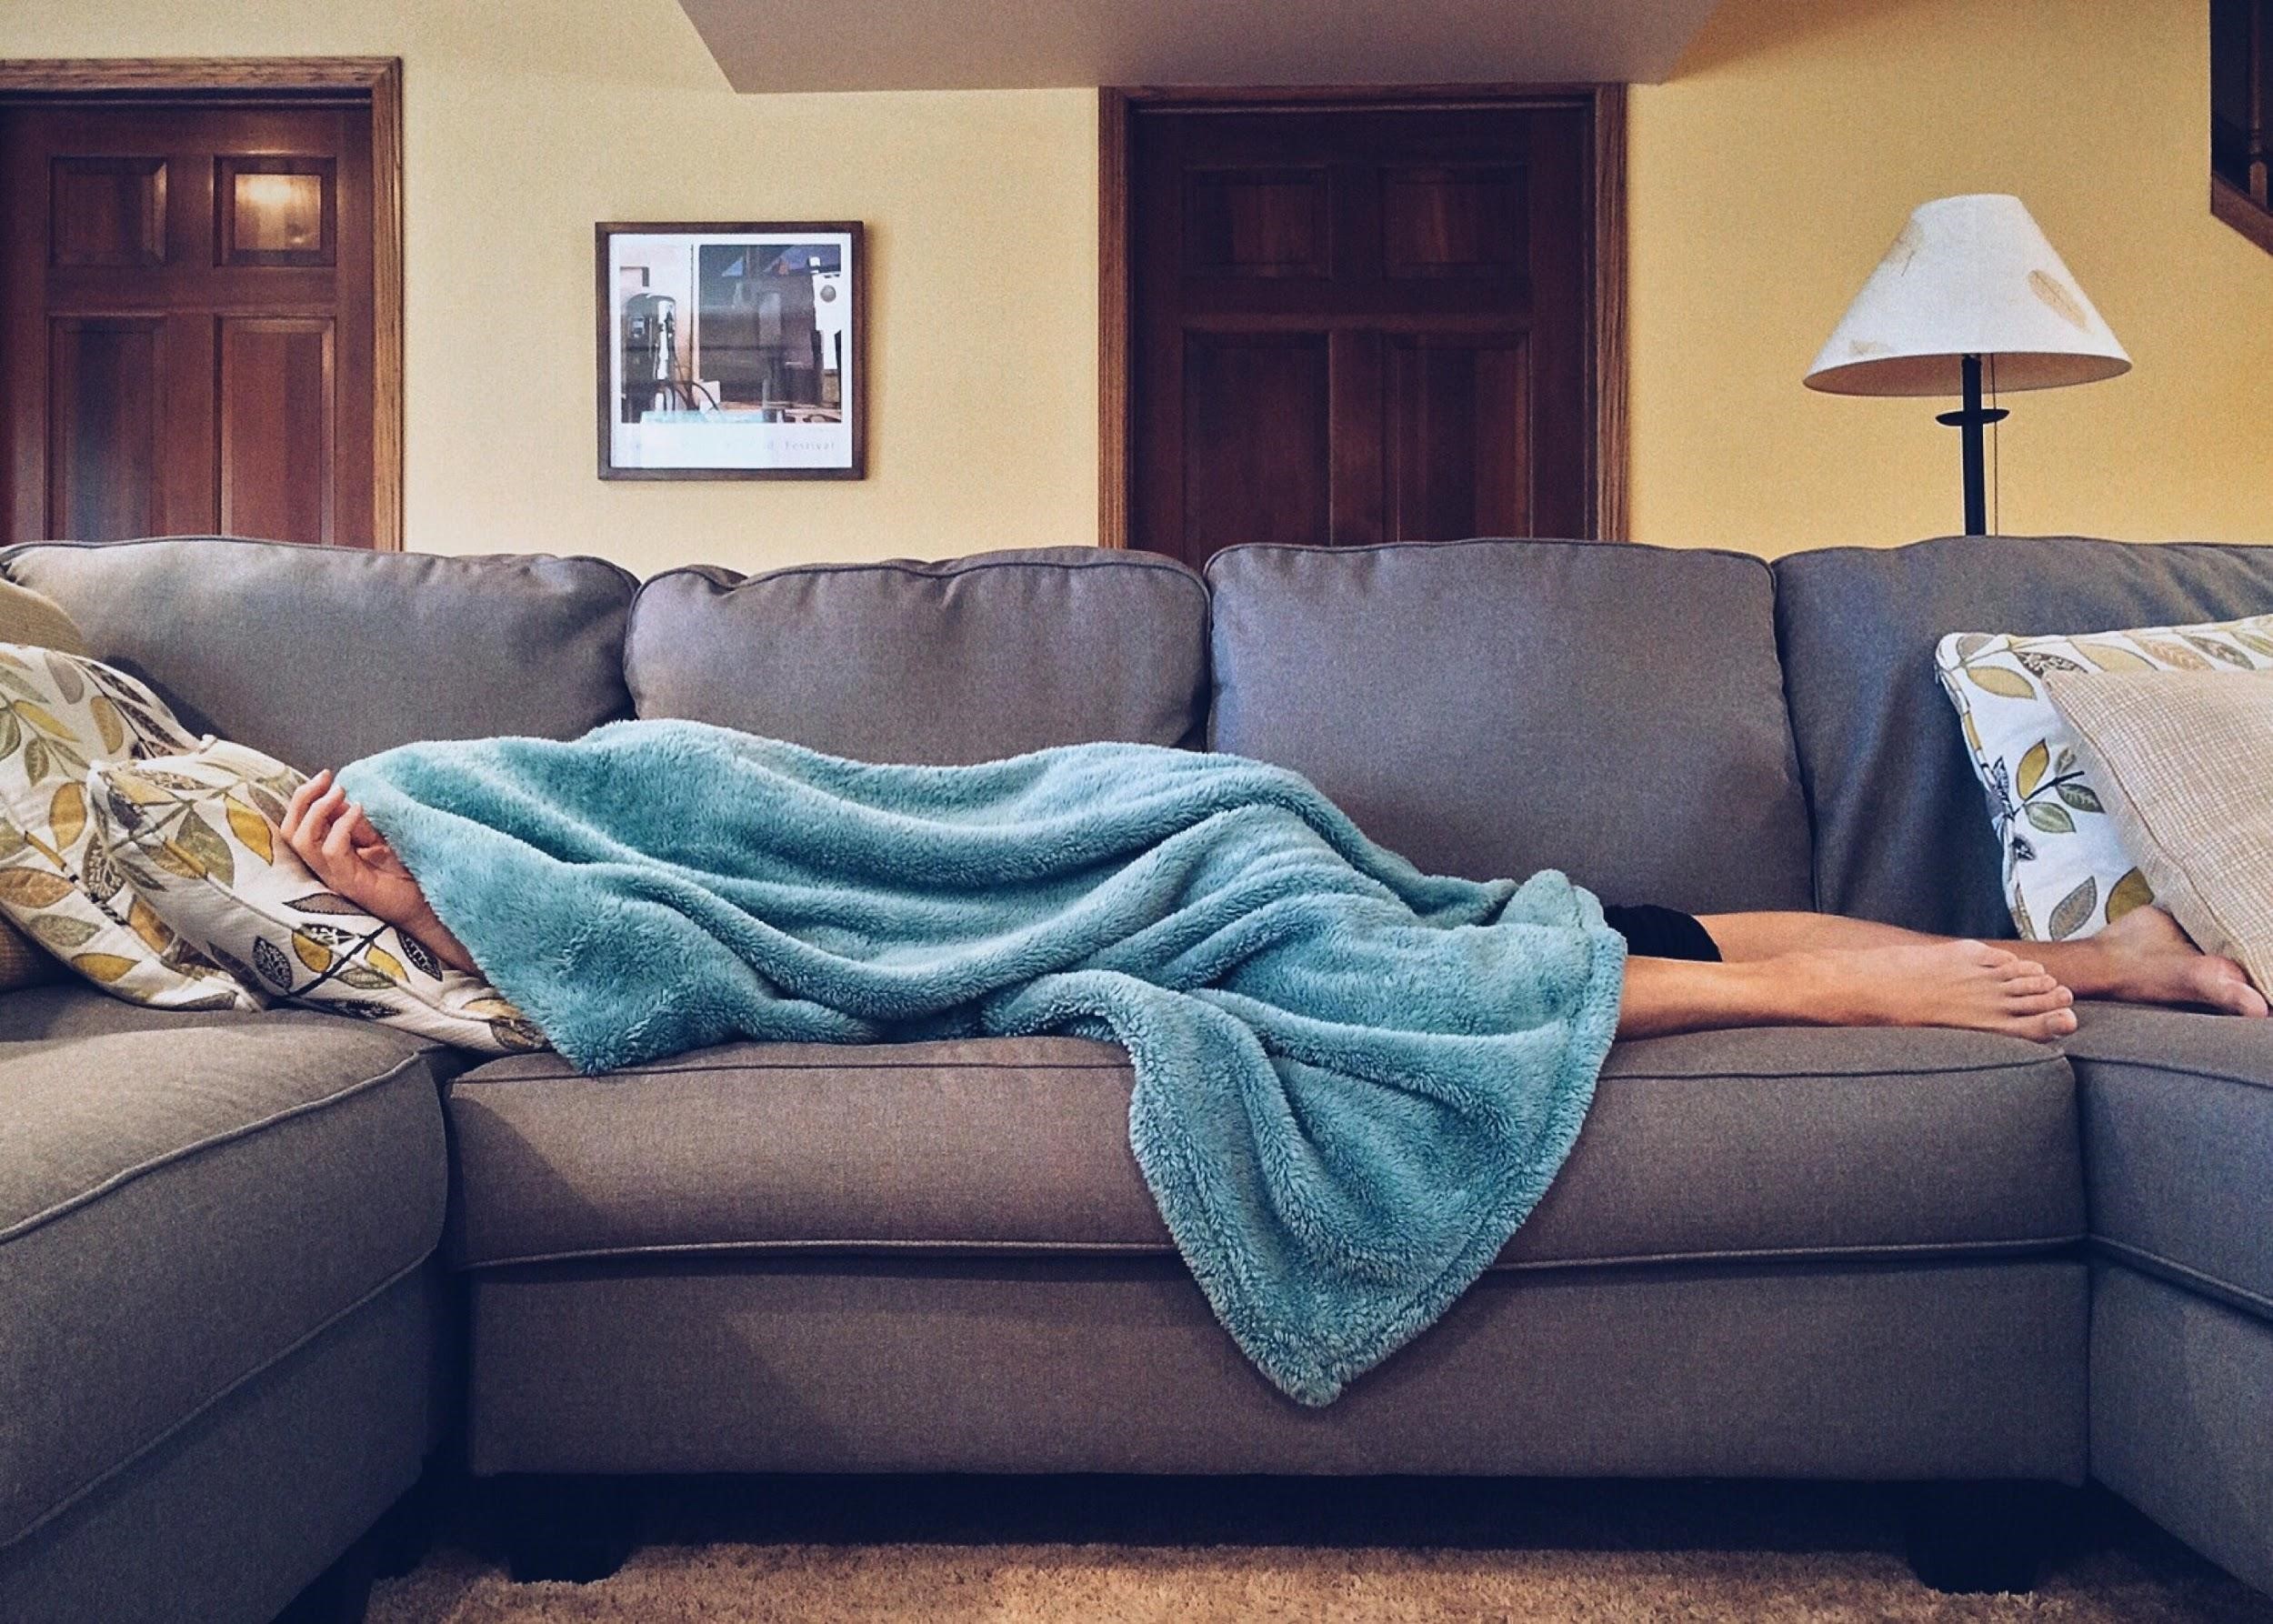 Is Poor Sleep Affecting Your Health?